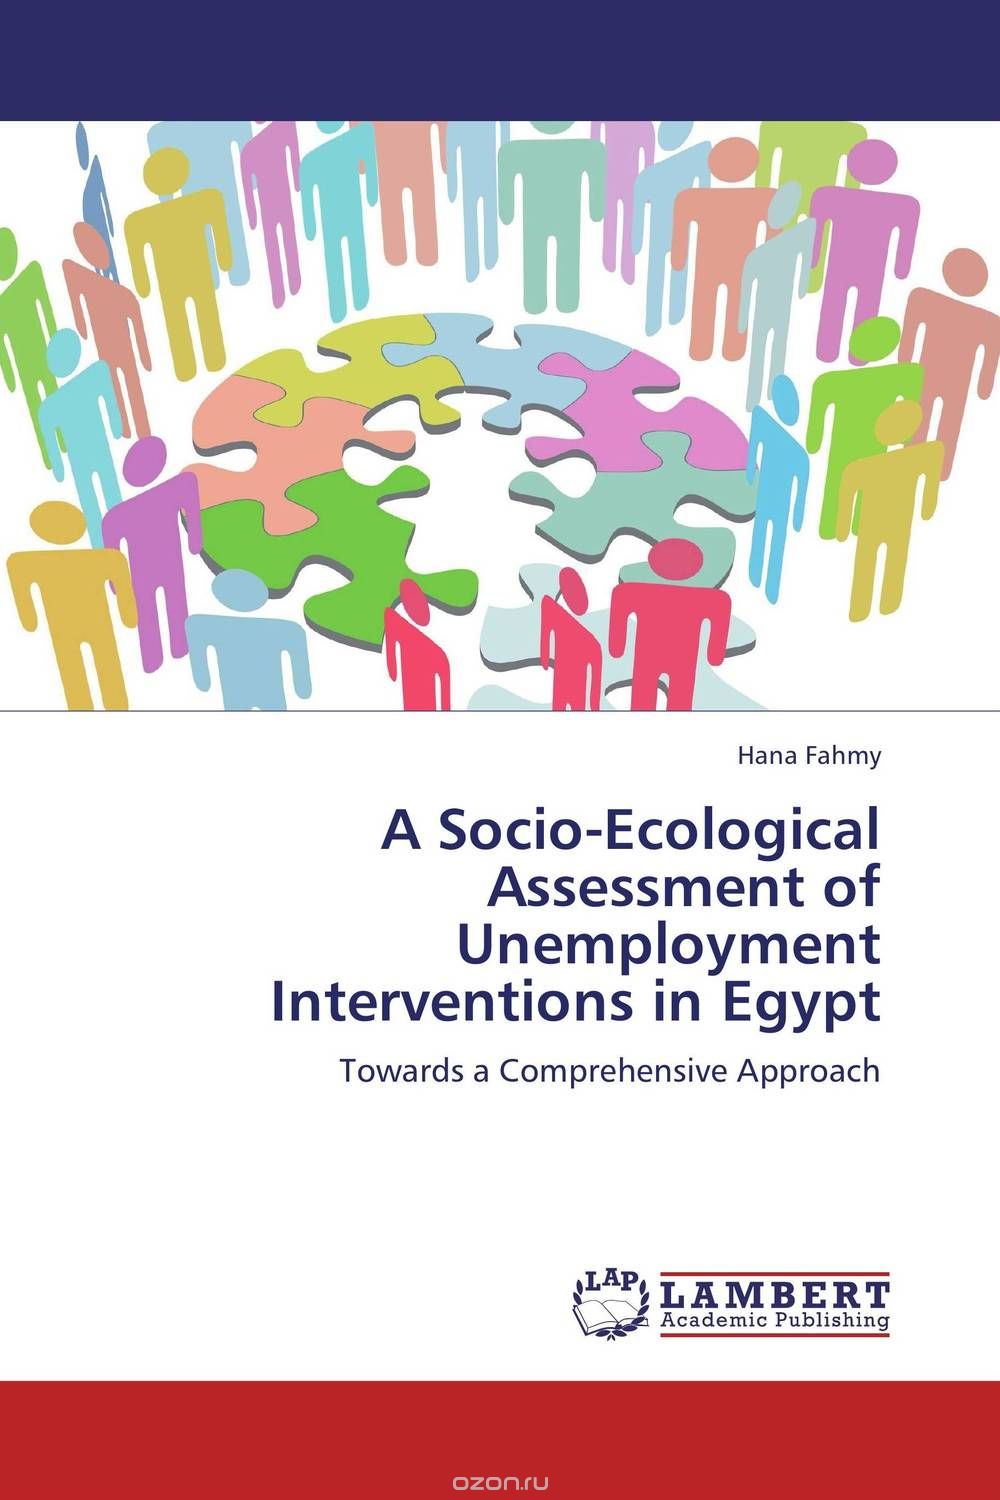 Скачать книгу "A Socio-­Ecological Assessment of Unemployment Interventions in Egypt"